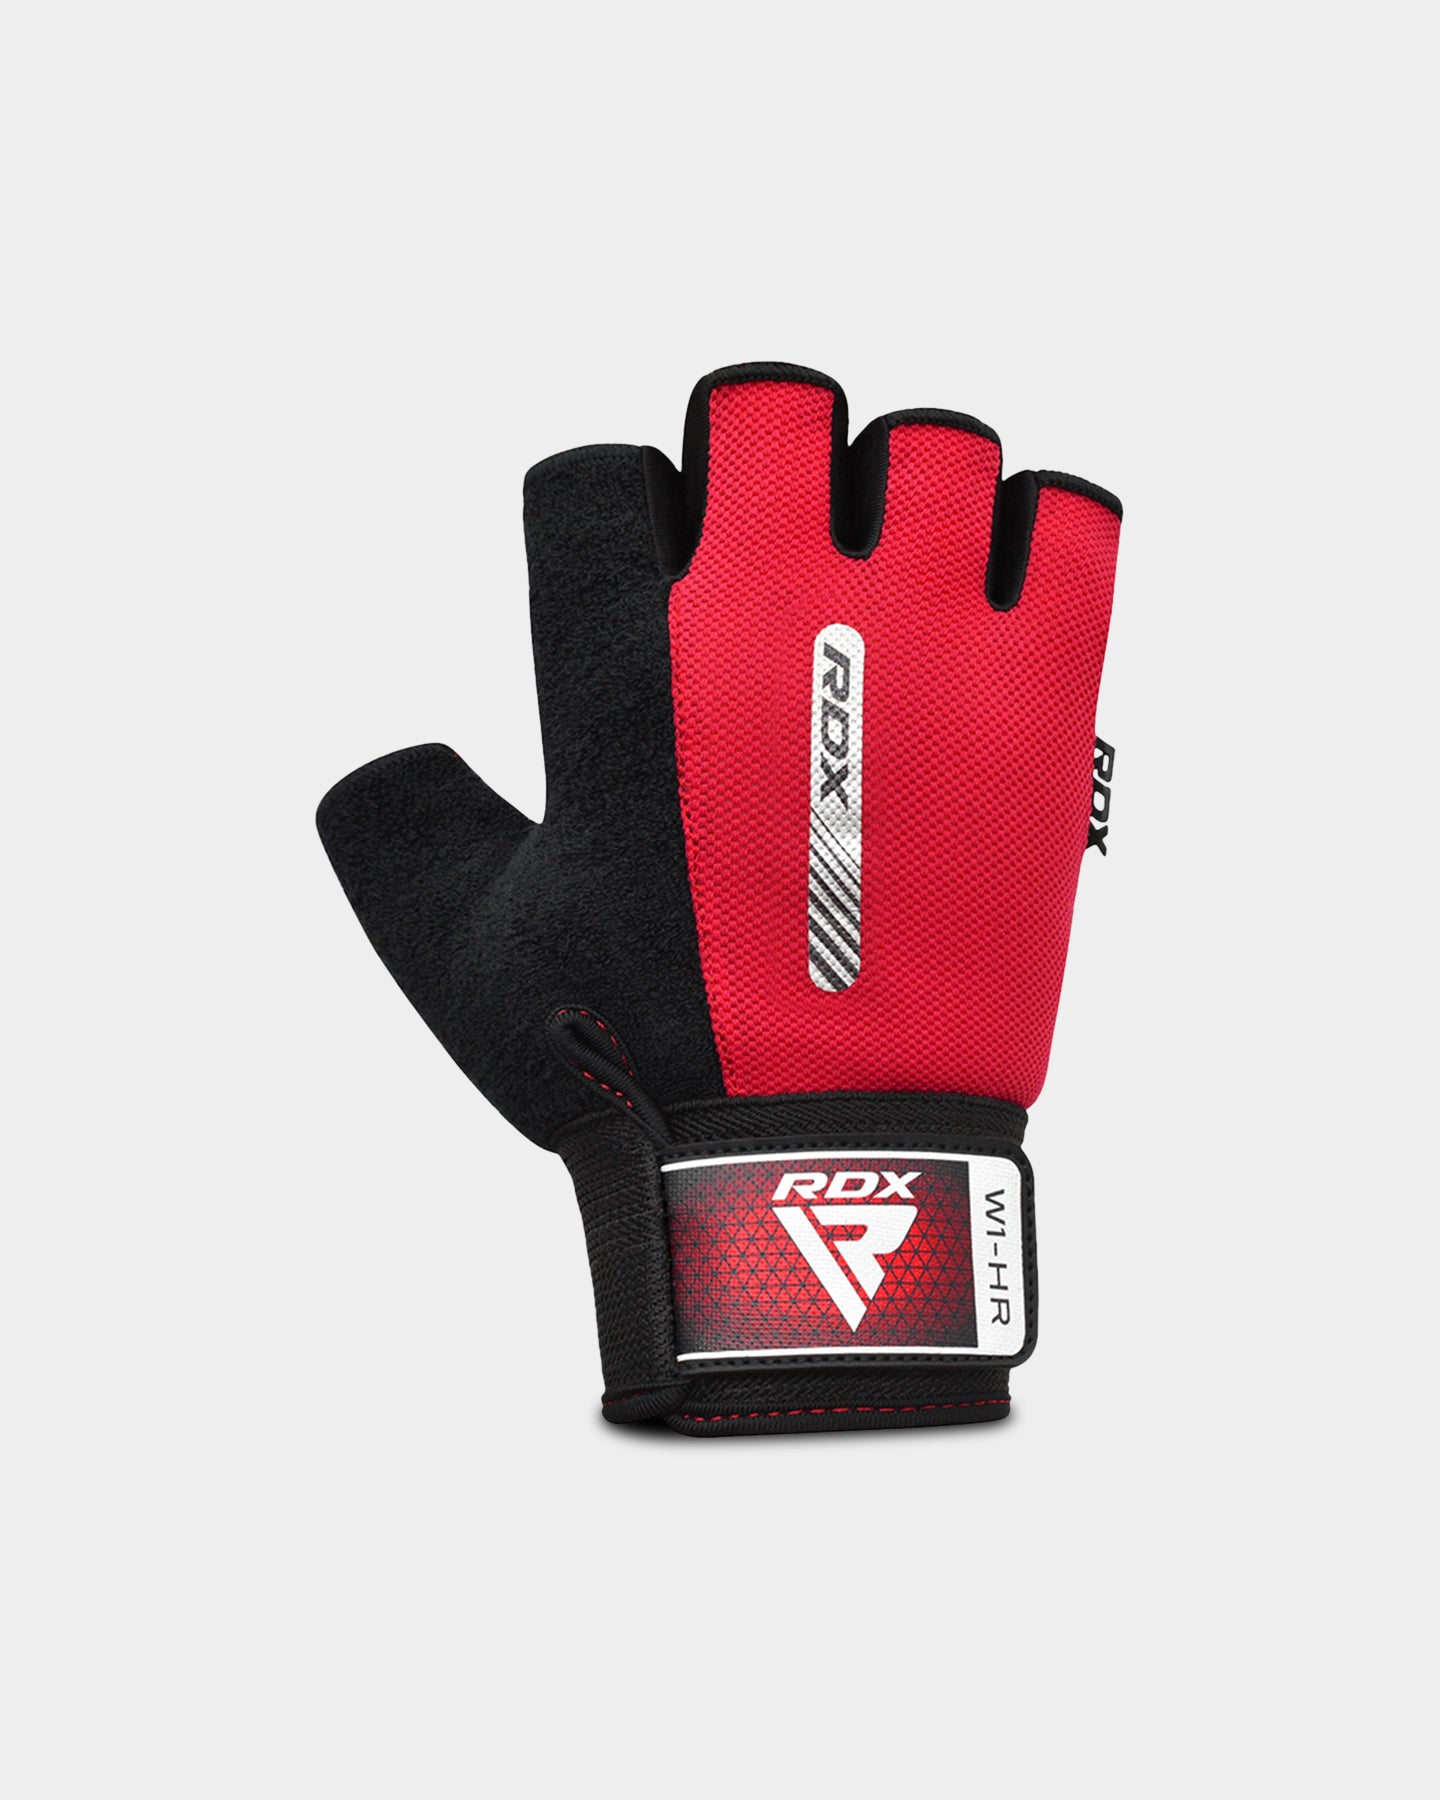 RDX Sports W1 Gym Workout Gloves, XL, Red A2